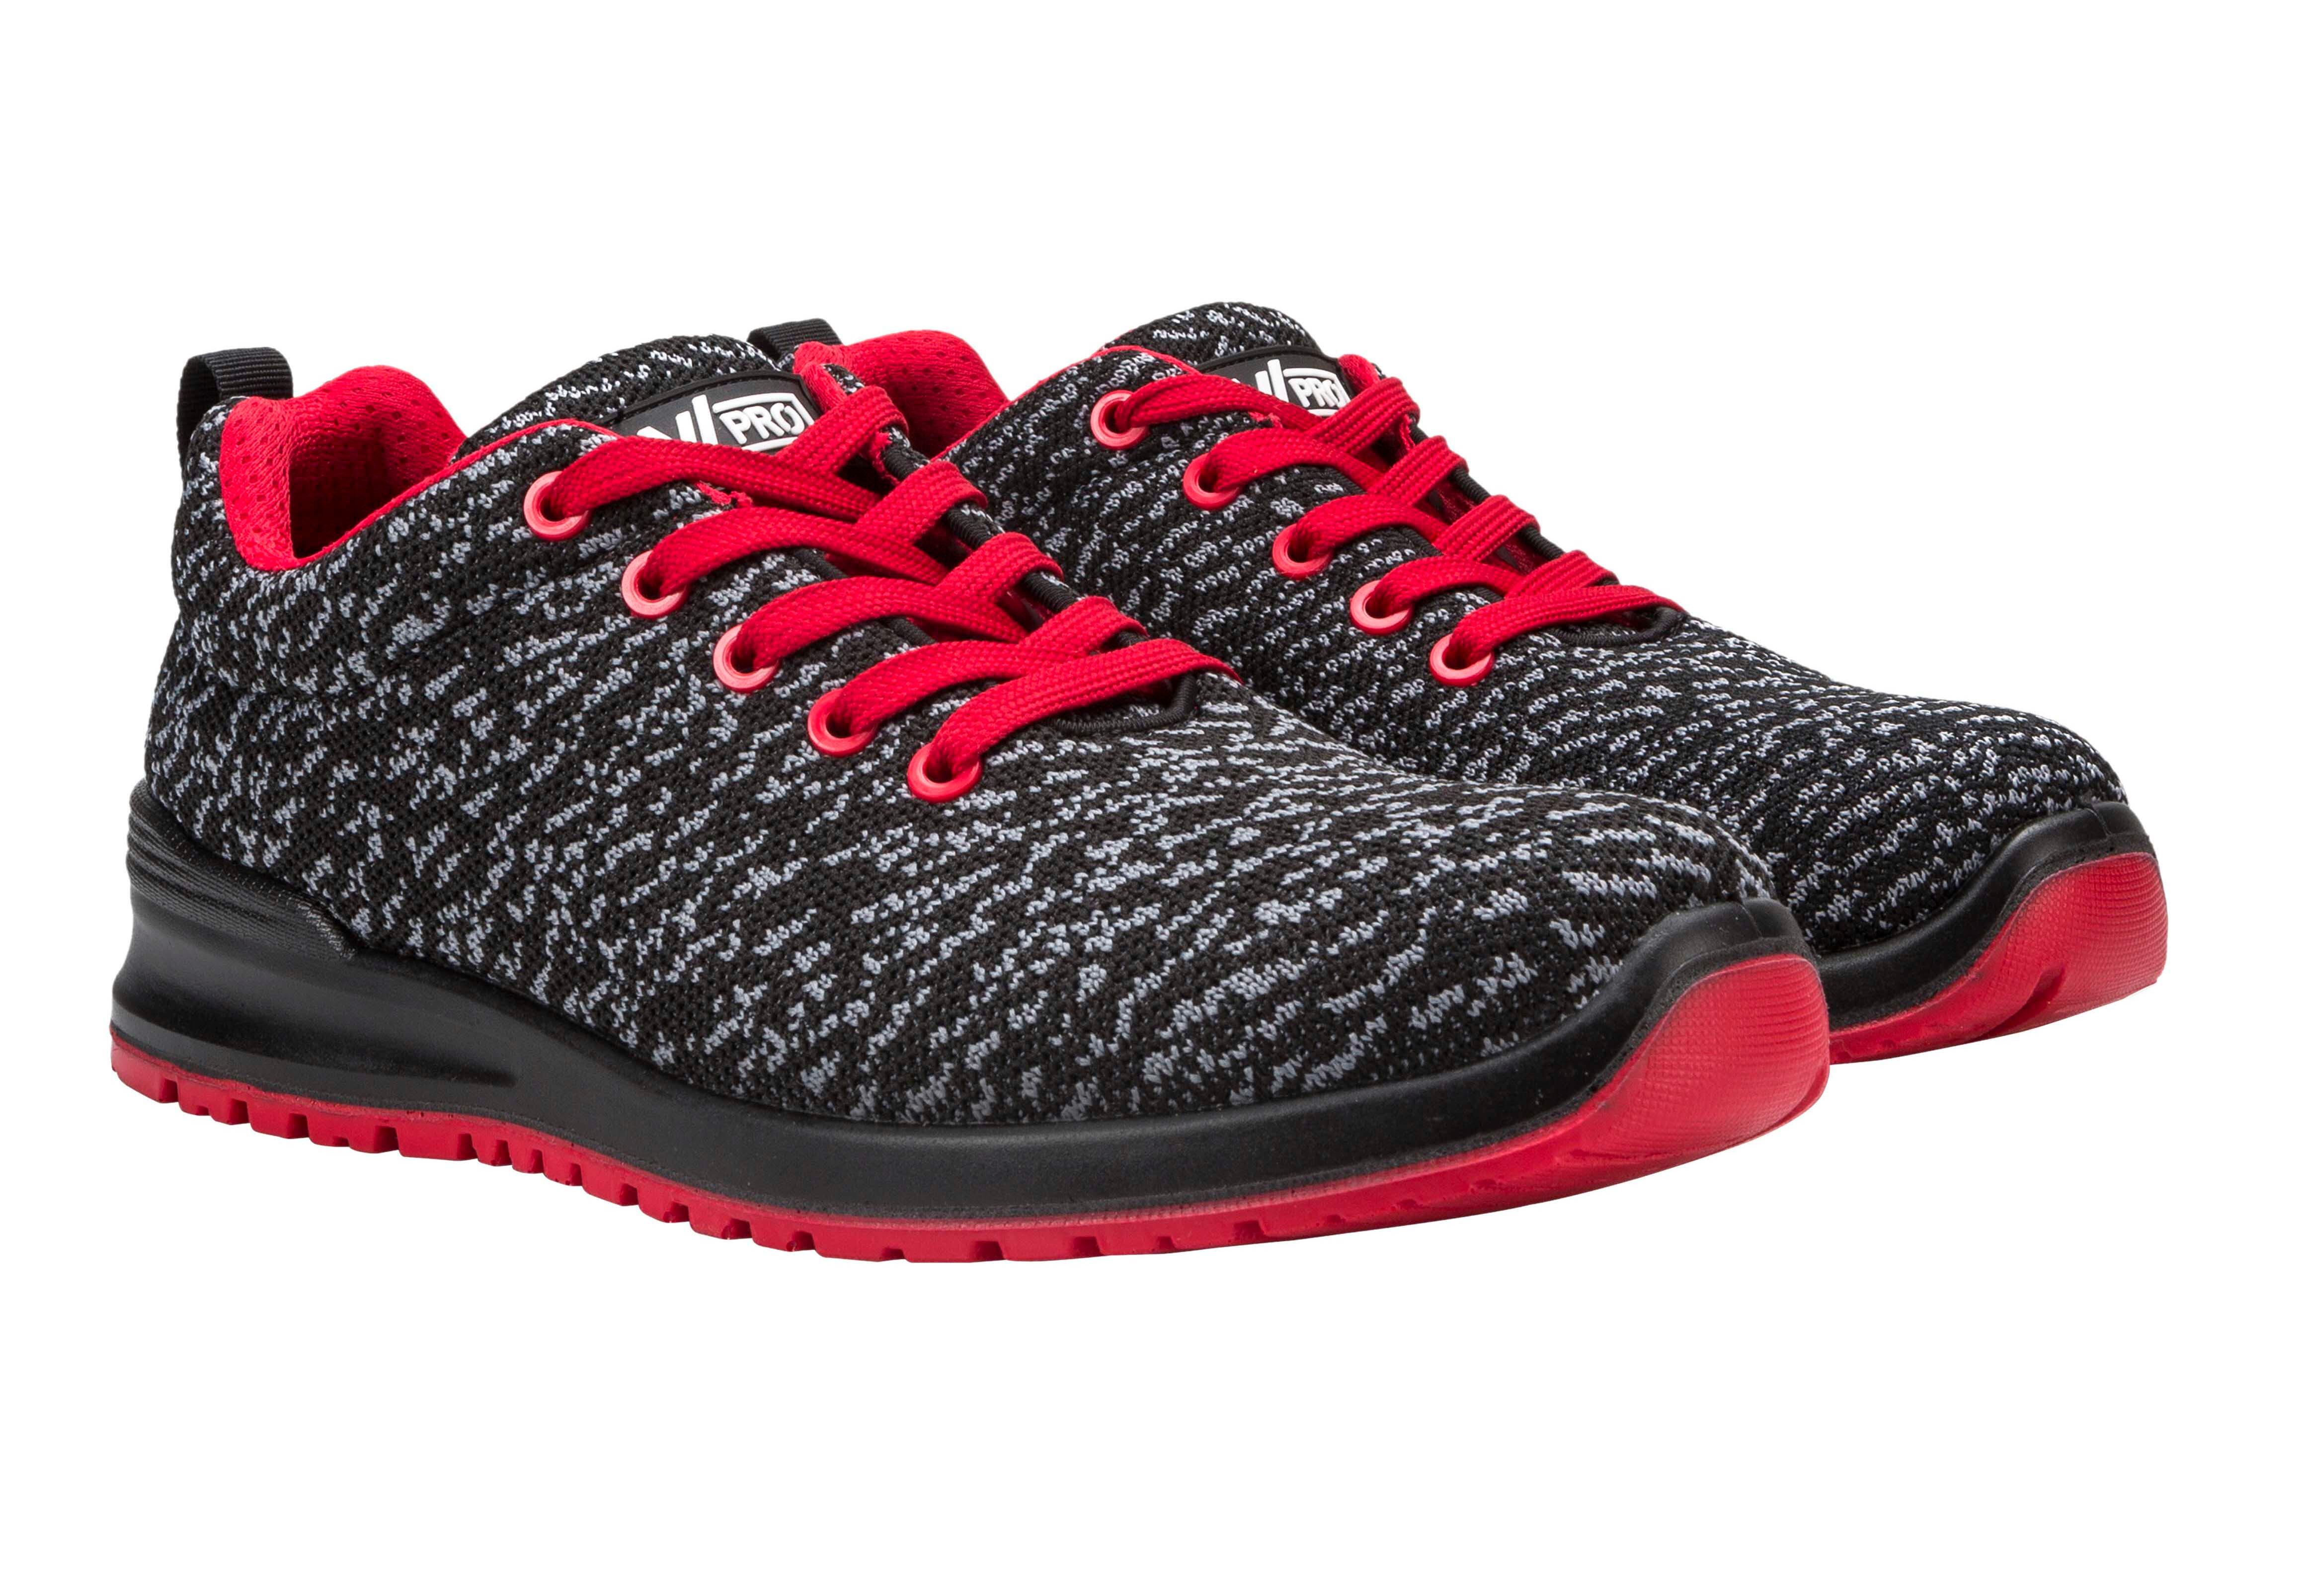 Zapato s1psrc metal rojo/negro t39